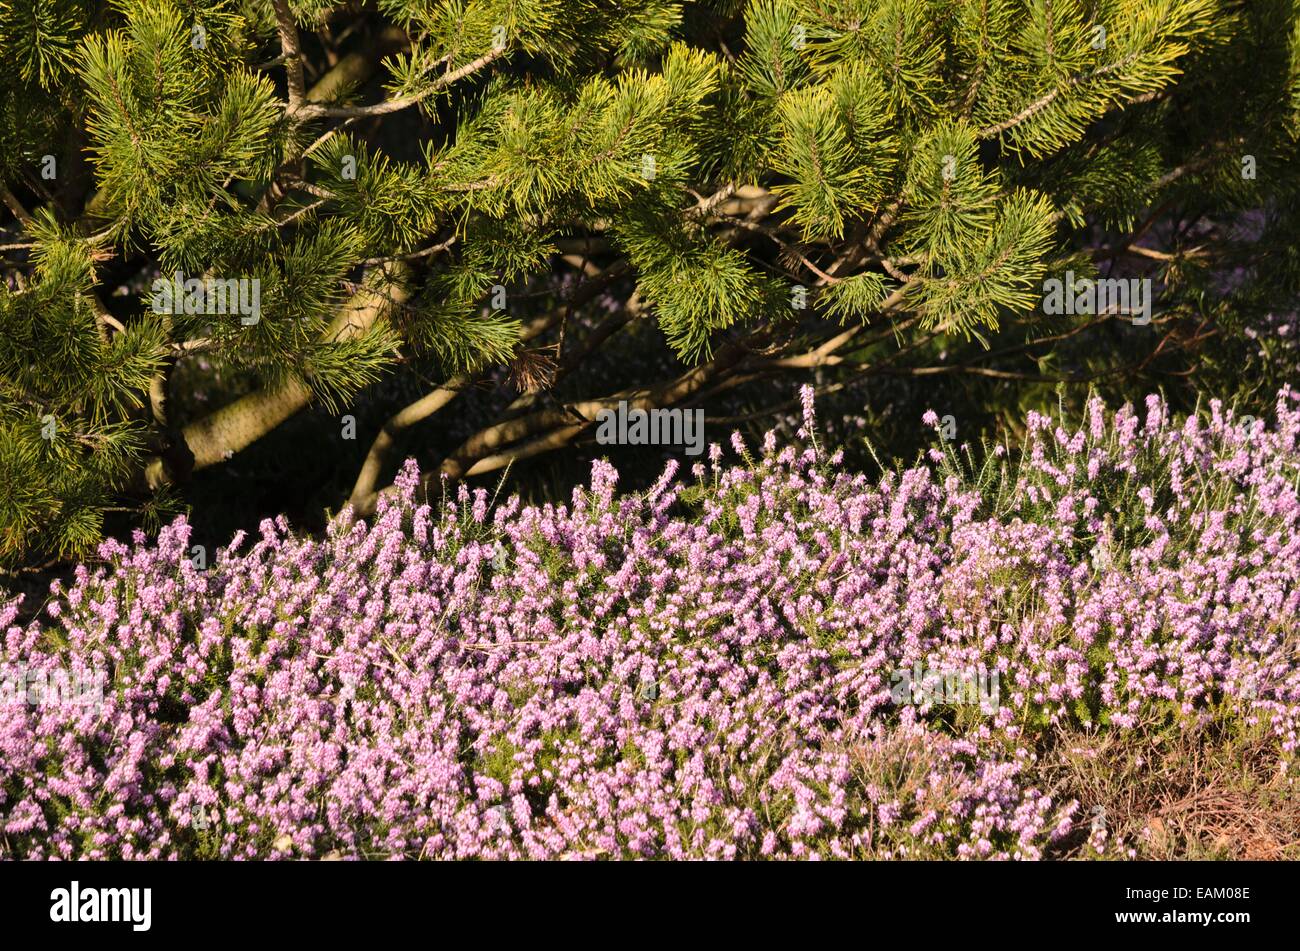 Winter heather (Erica carnea 'Winter Beauty' syn. Erica herbacea 'Winter Beauty') and Scots pine (Pinus sylvestris 'Aurea') Stock Photo